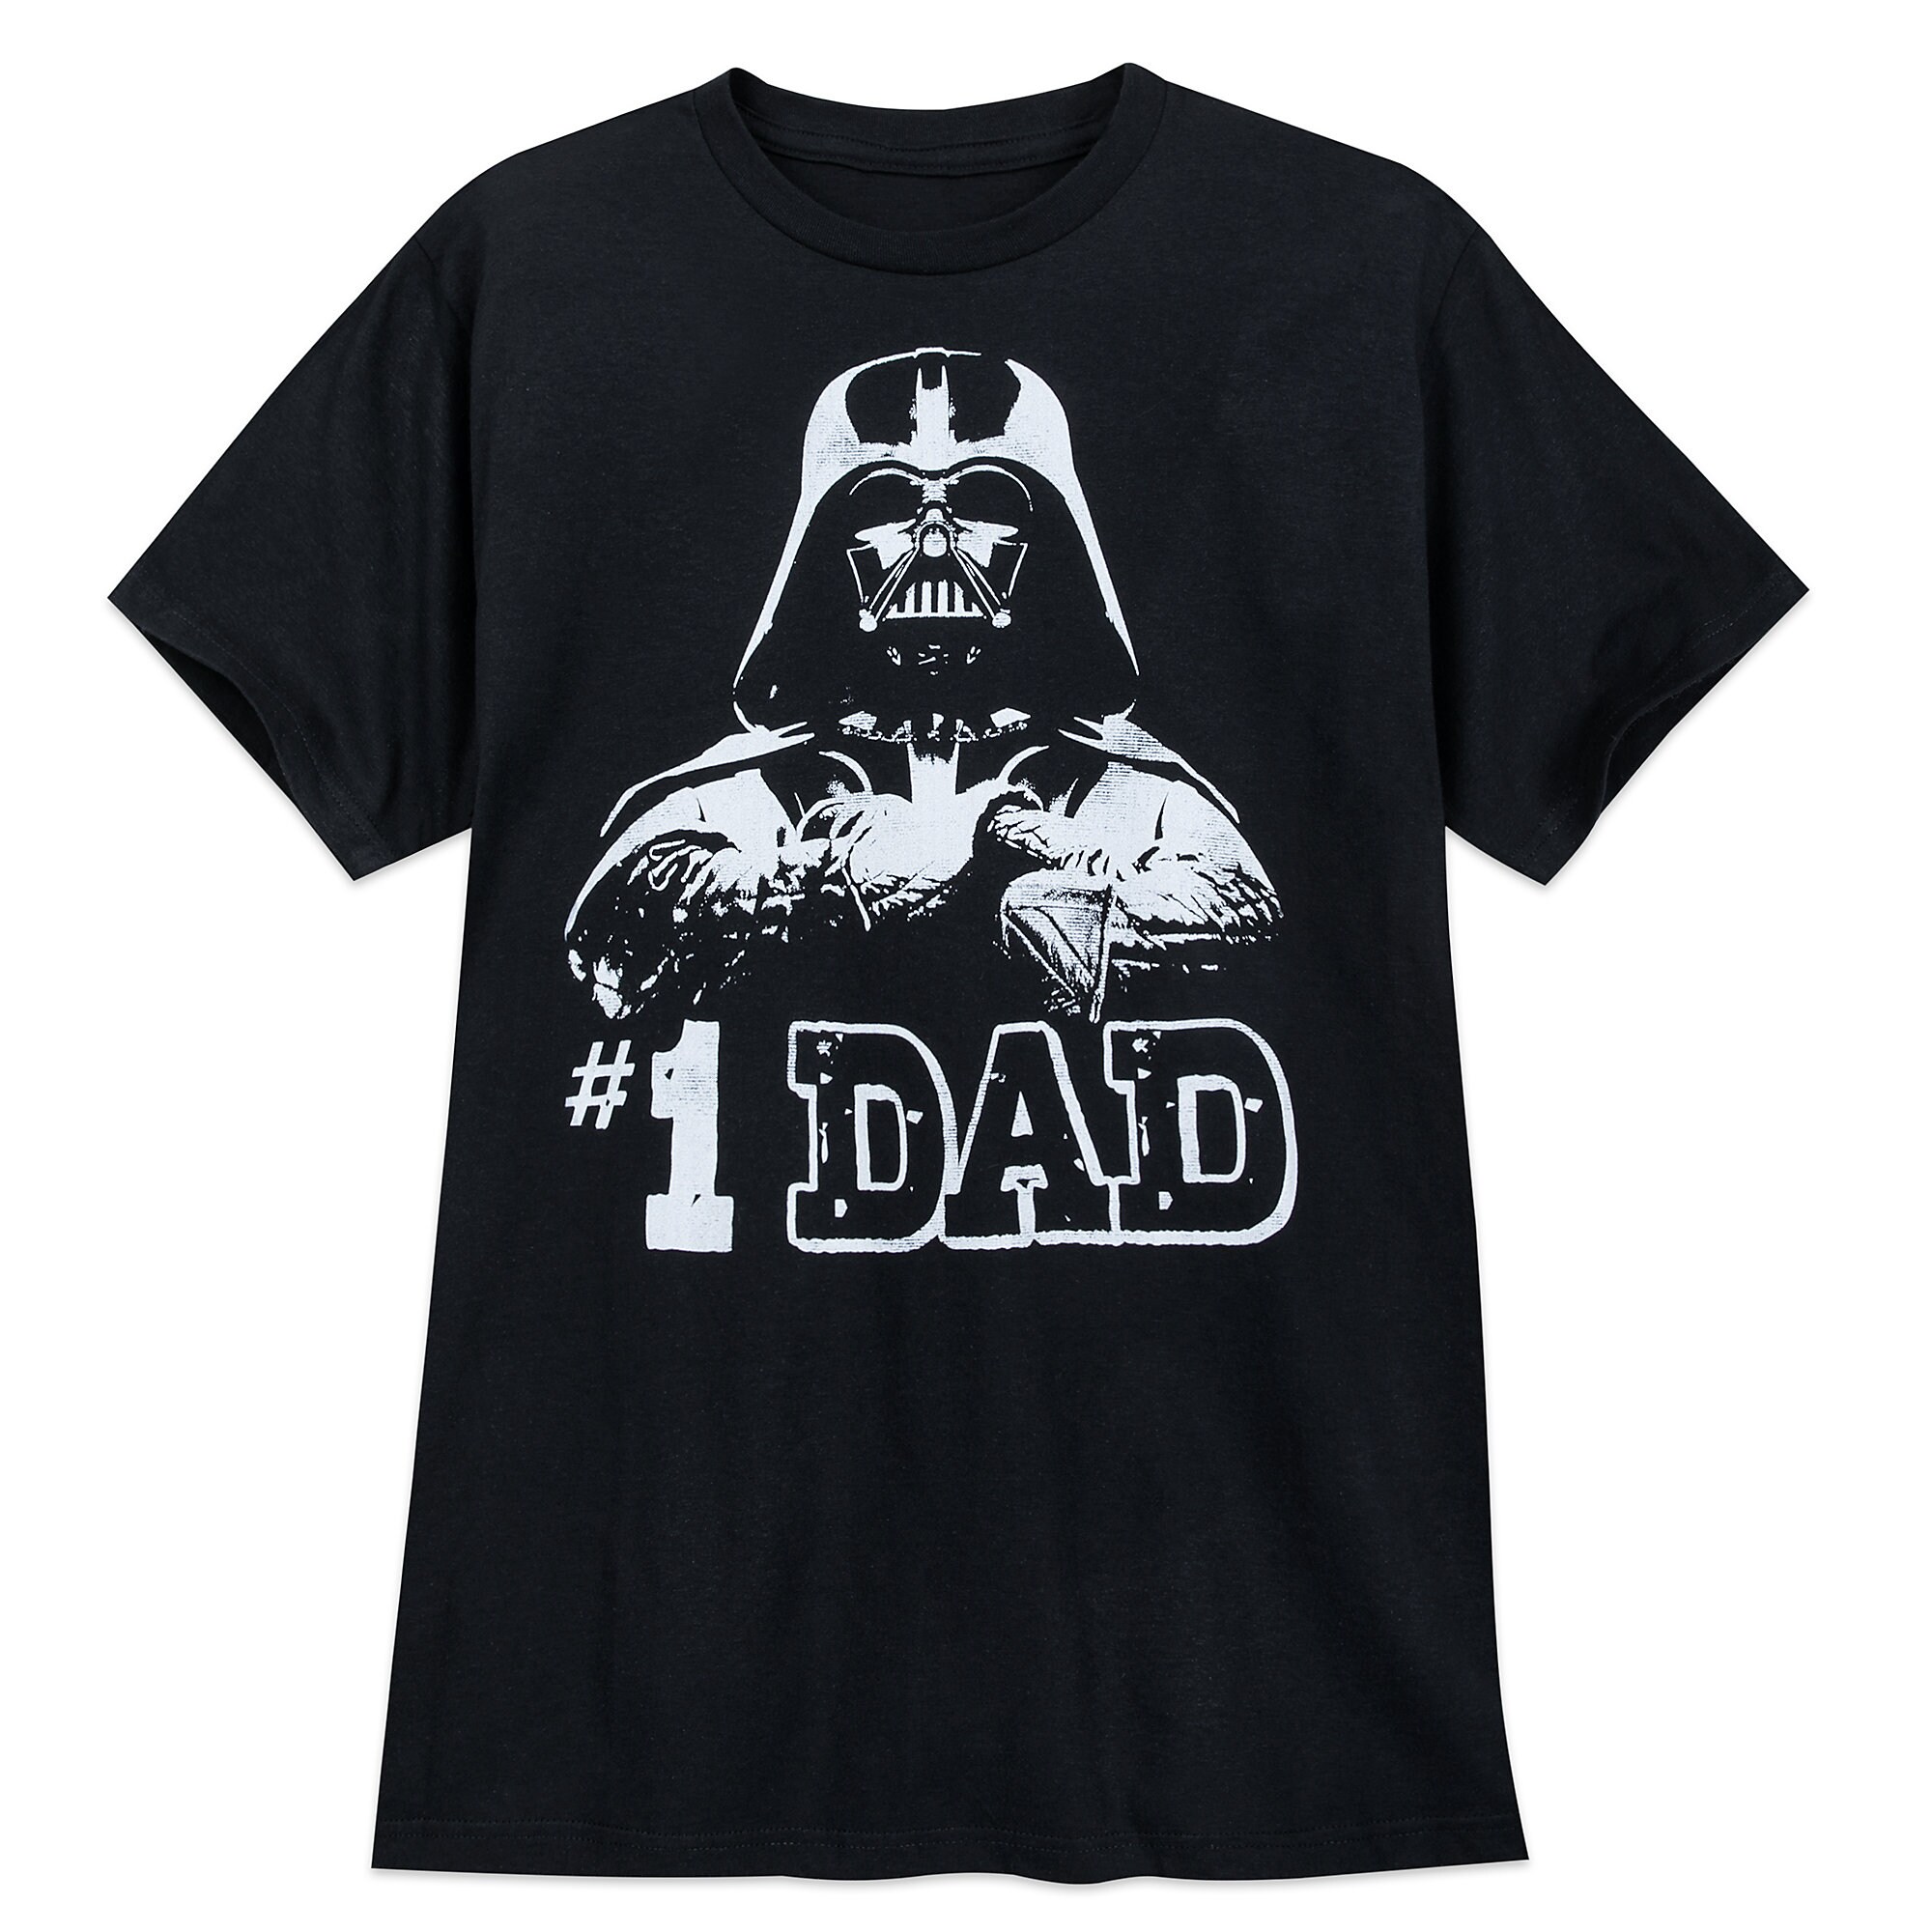 Darth Vader ''#1 Dad'' T-Shirt for Adults - Star Wars